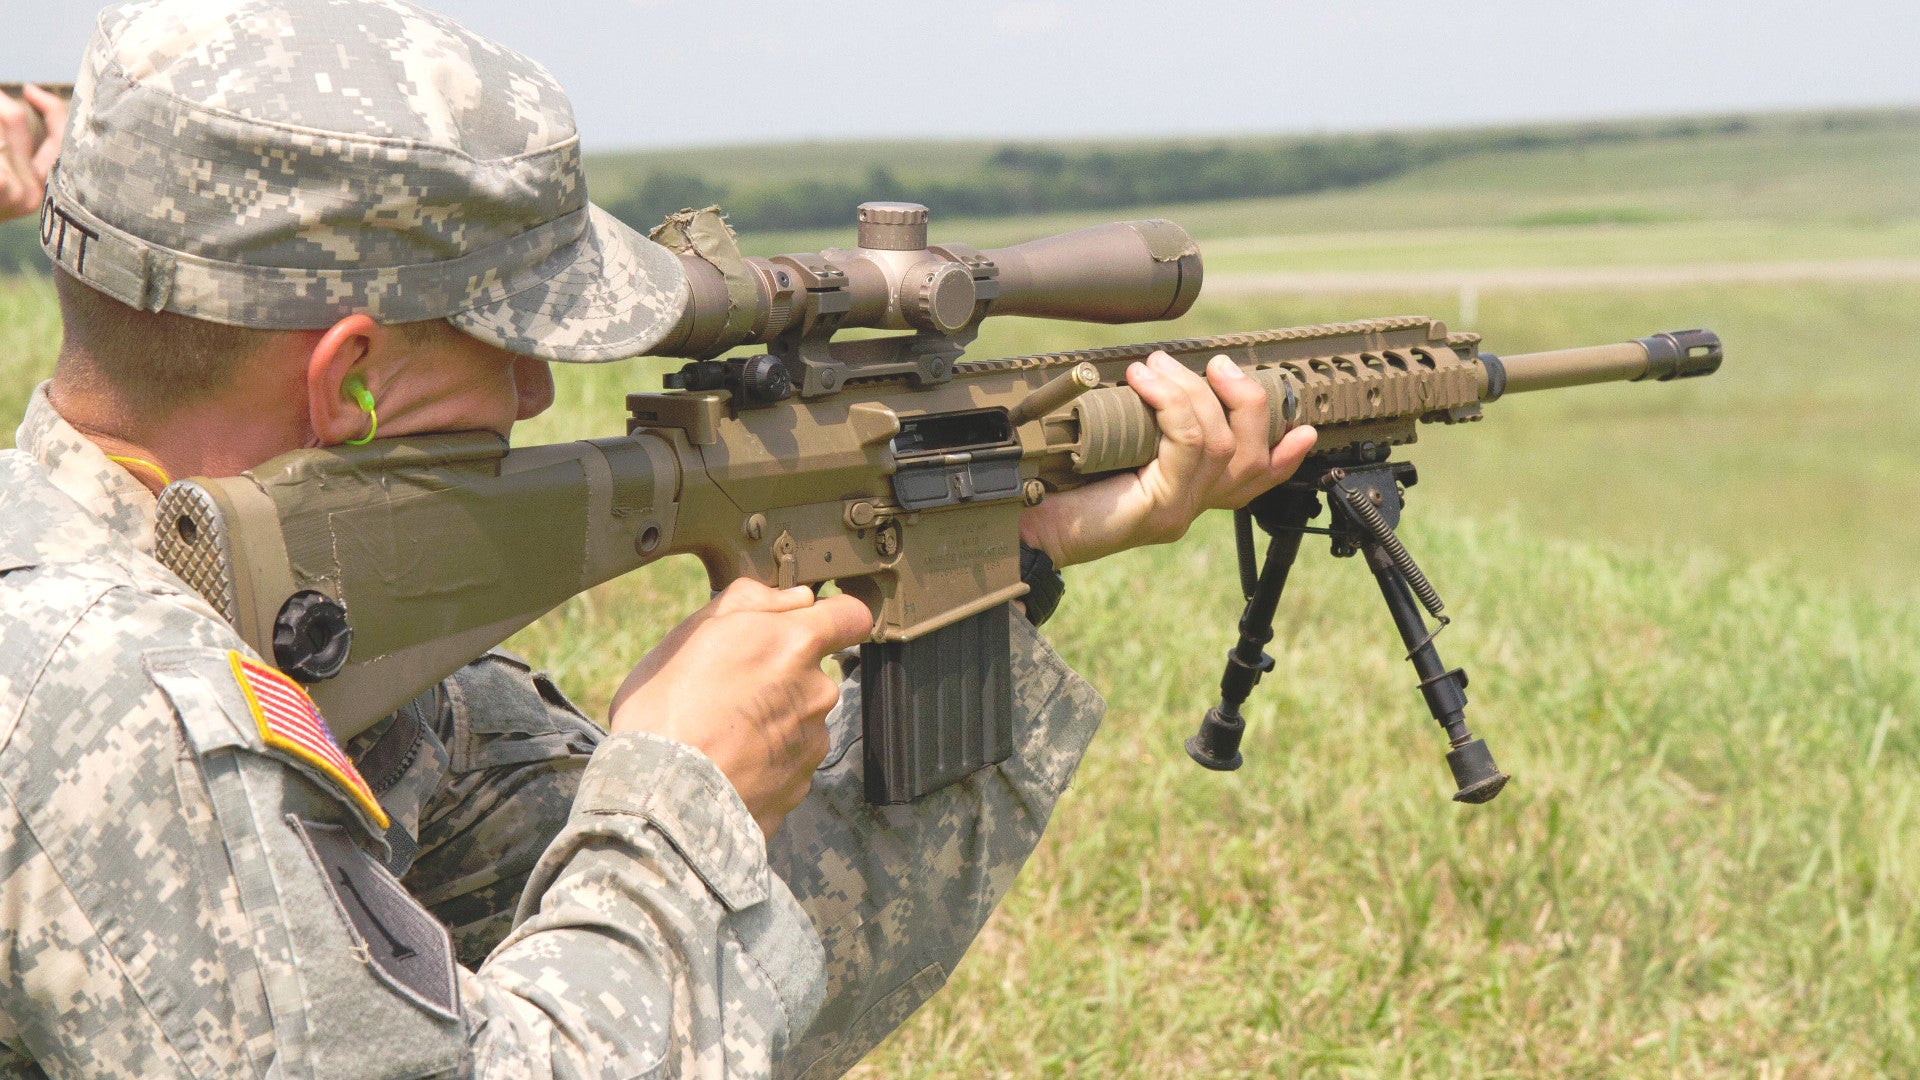 US Army Seeks a New Battle Rifle for Piercing Advanced Body Armor